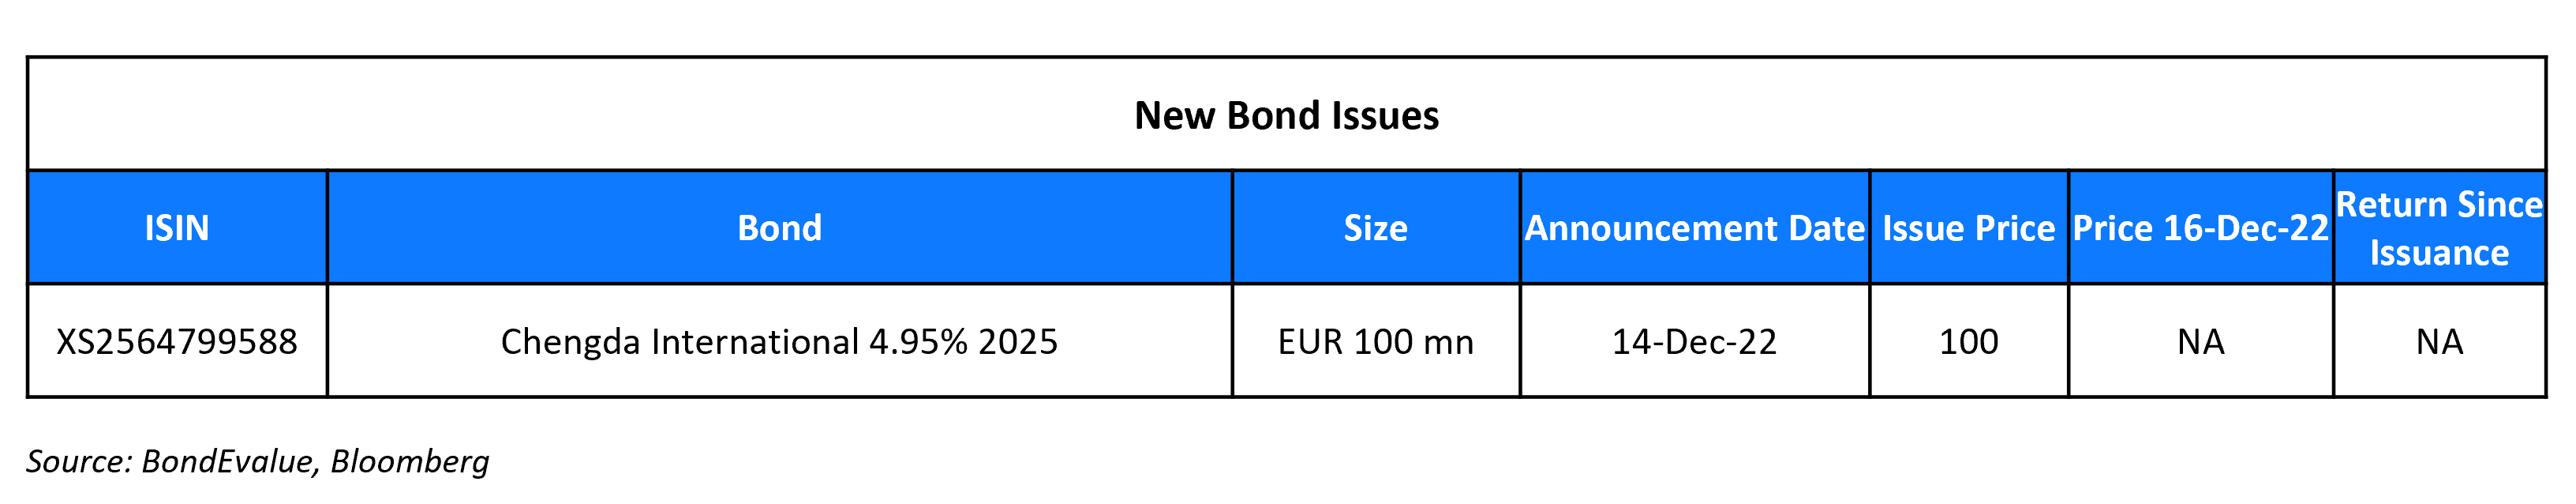 New Bond Issues 16 Dec 22